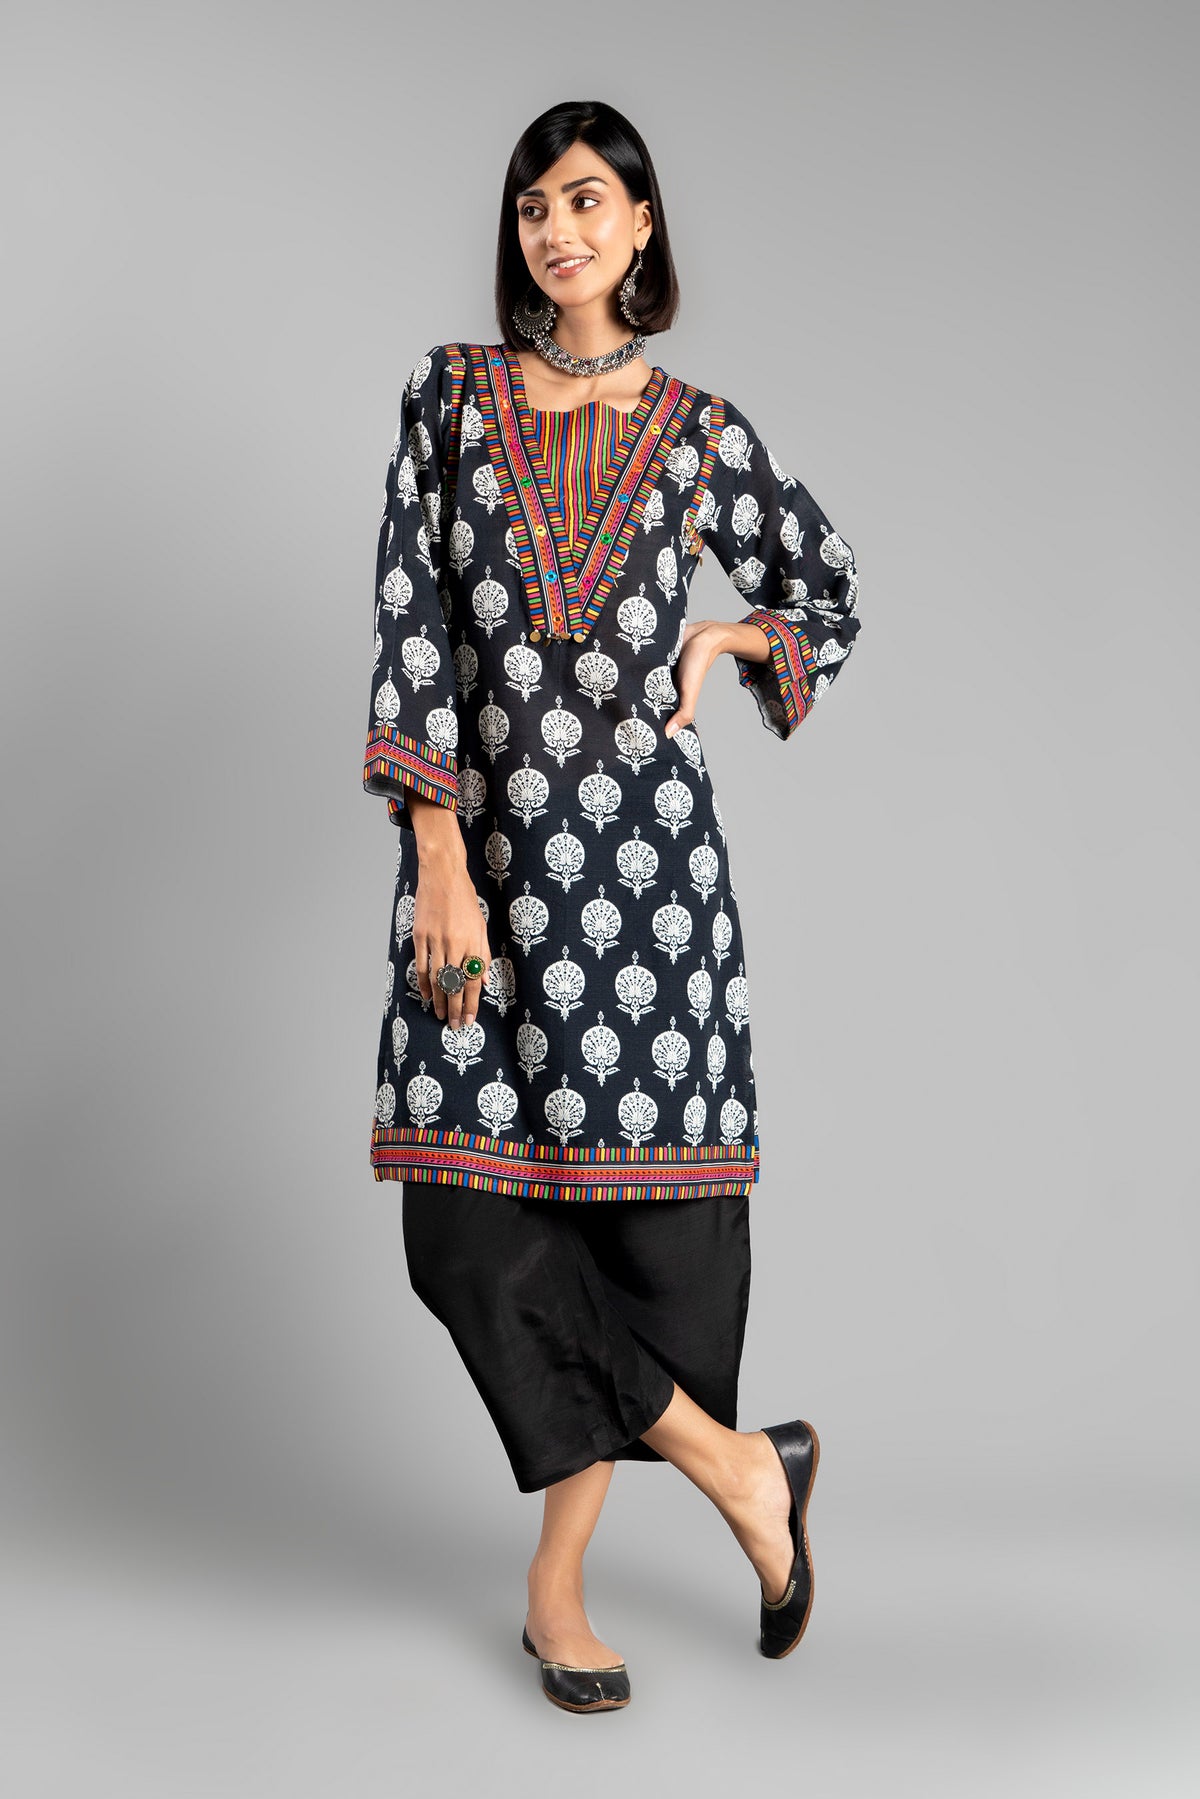 Batiq Impression in Multi coloured Printed Slub Khaddar fabric